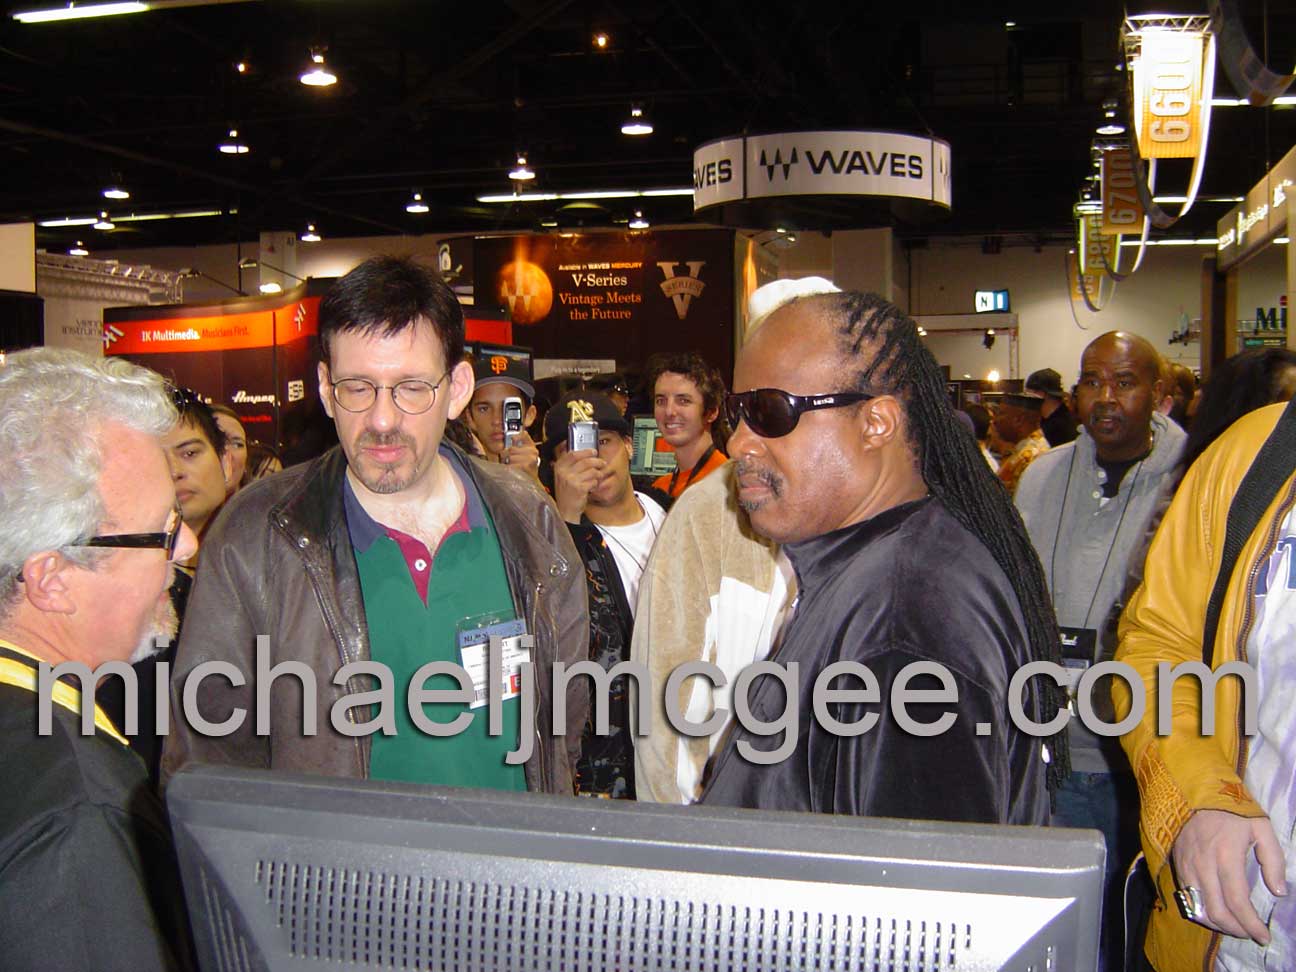 Stevie Wonder / michaeljmcgee.com